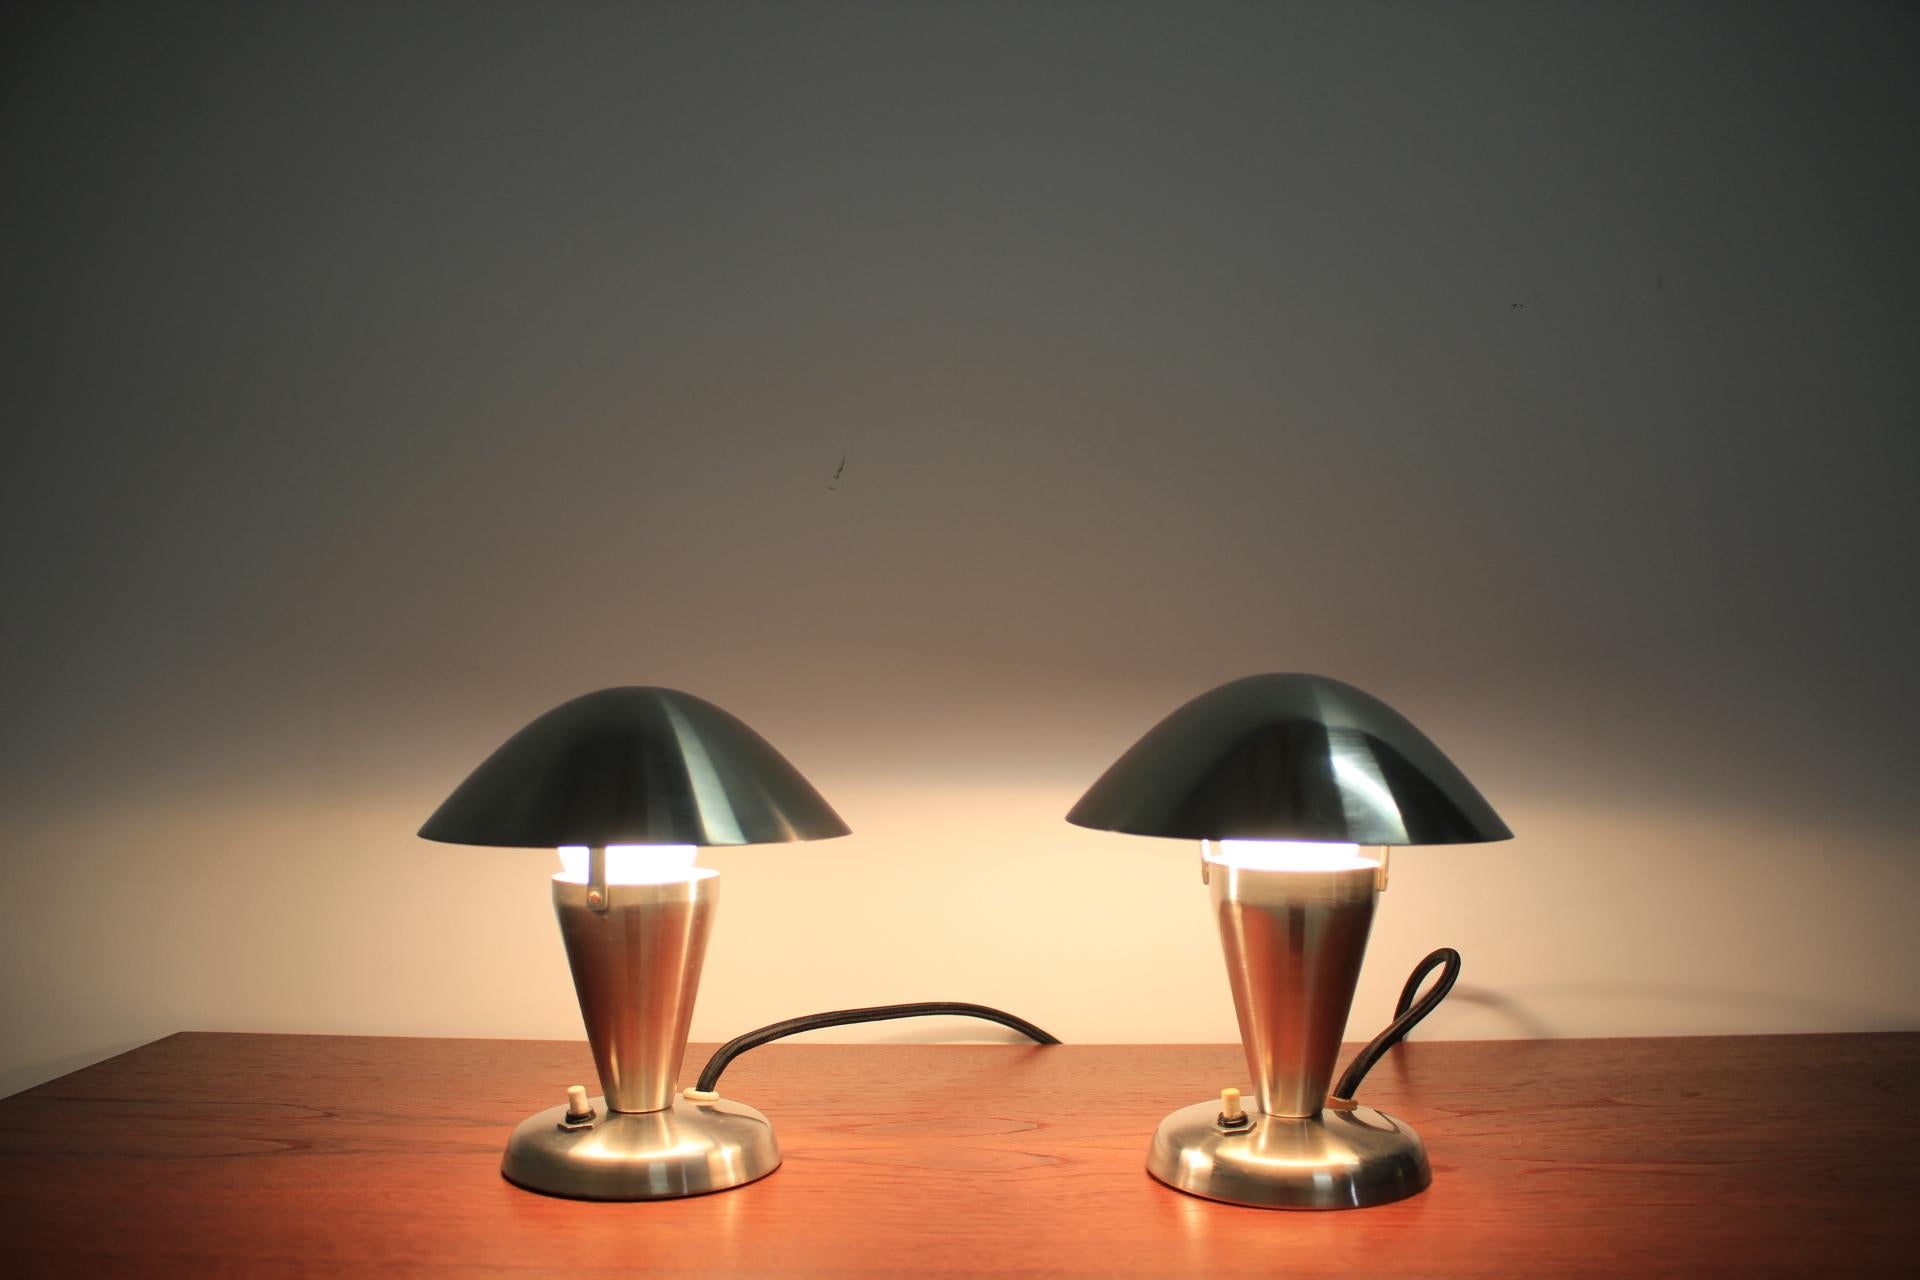 Pair of Chrome Bauhaus Table Lamps, 1930s (Tschechisch)